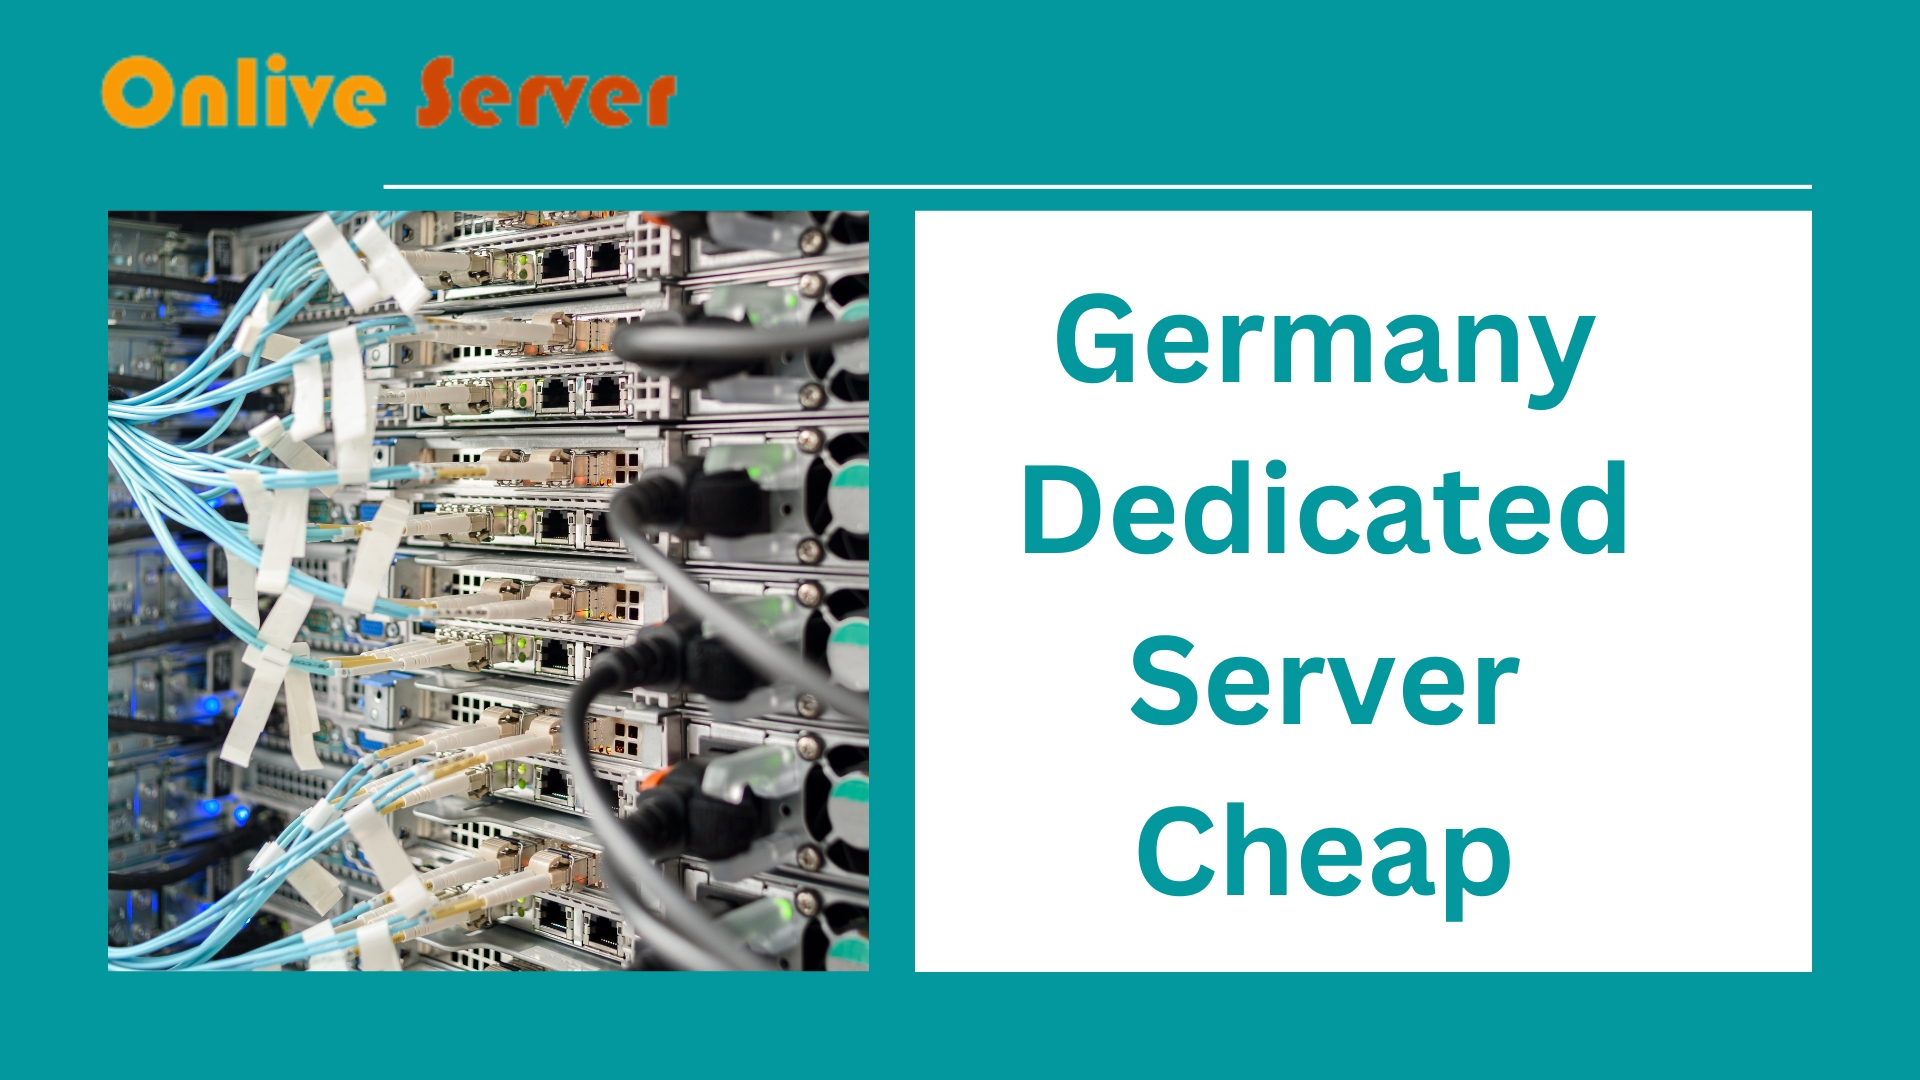 Germany Dedicated Server Cheap